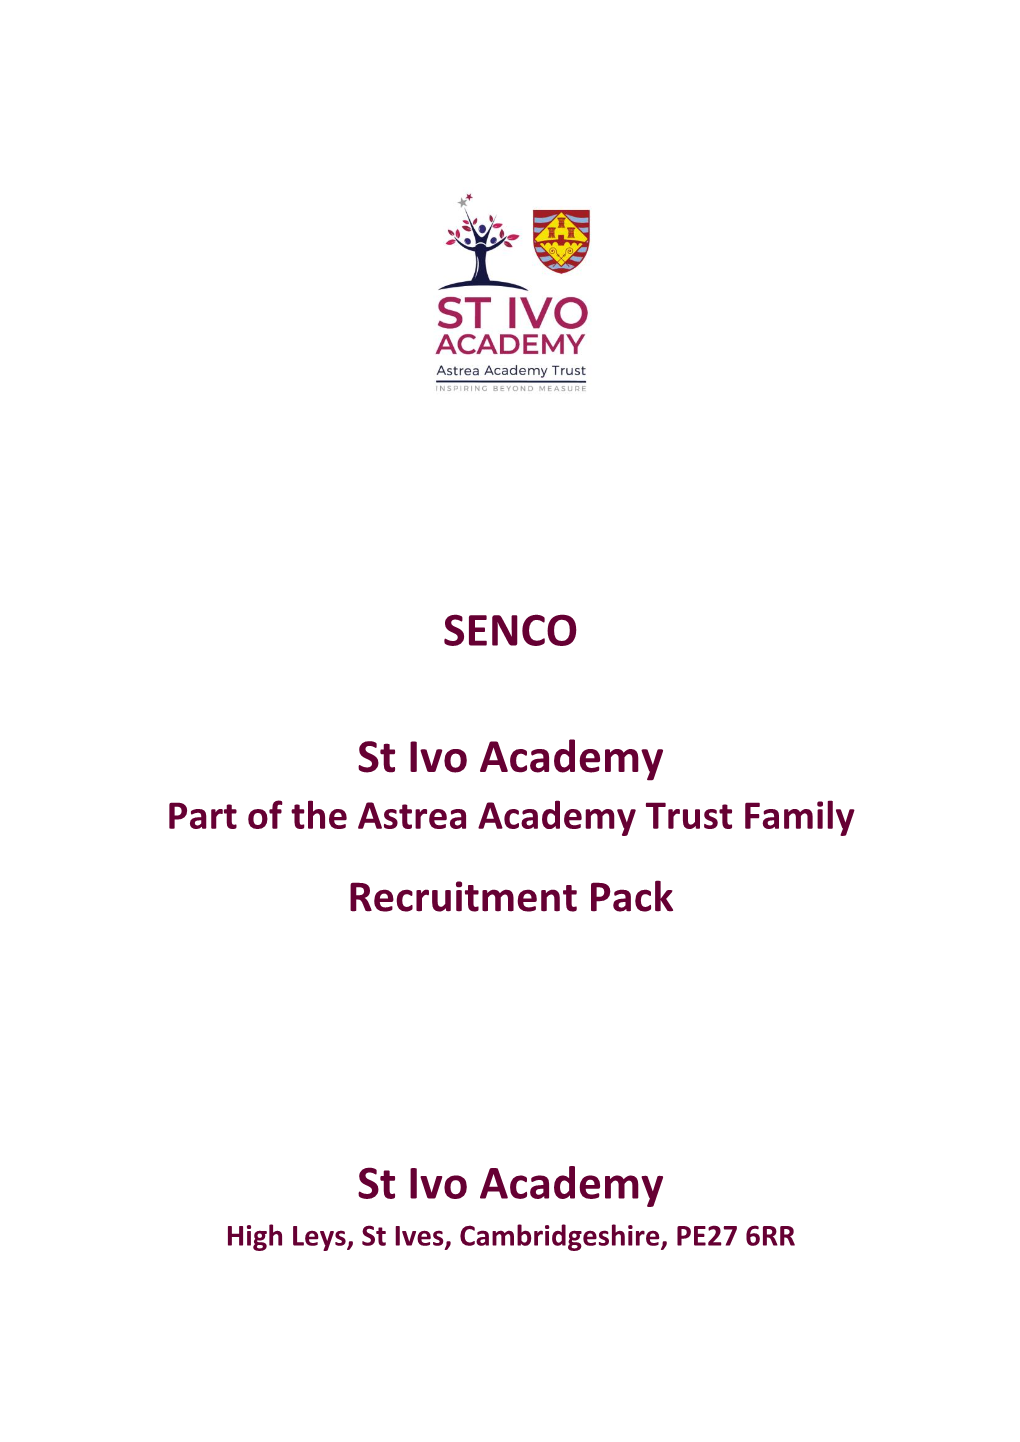 SENCO St Ivo Academy St Ivo Academy